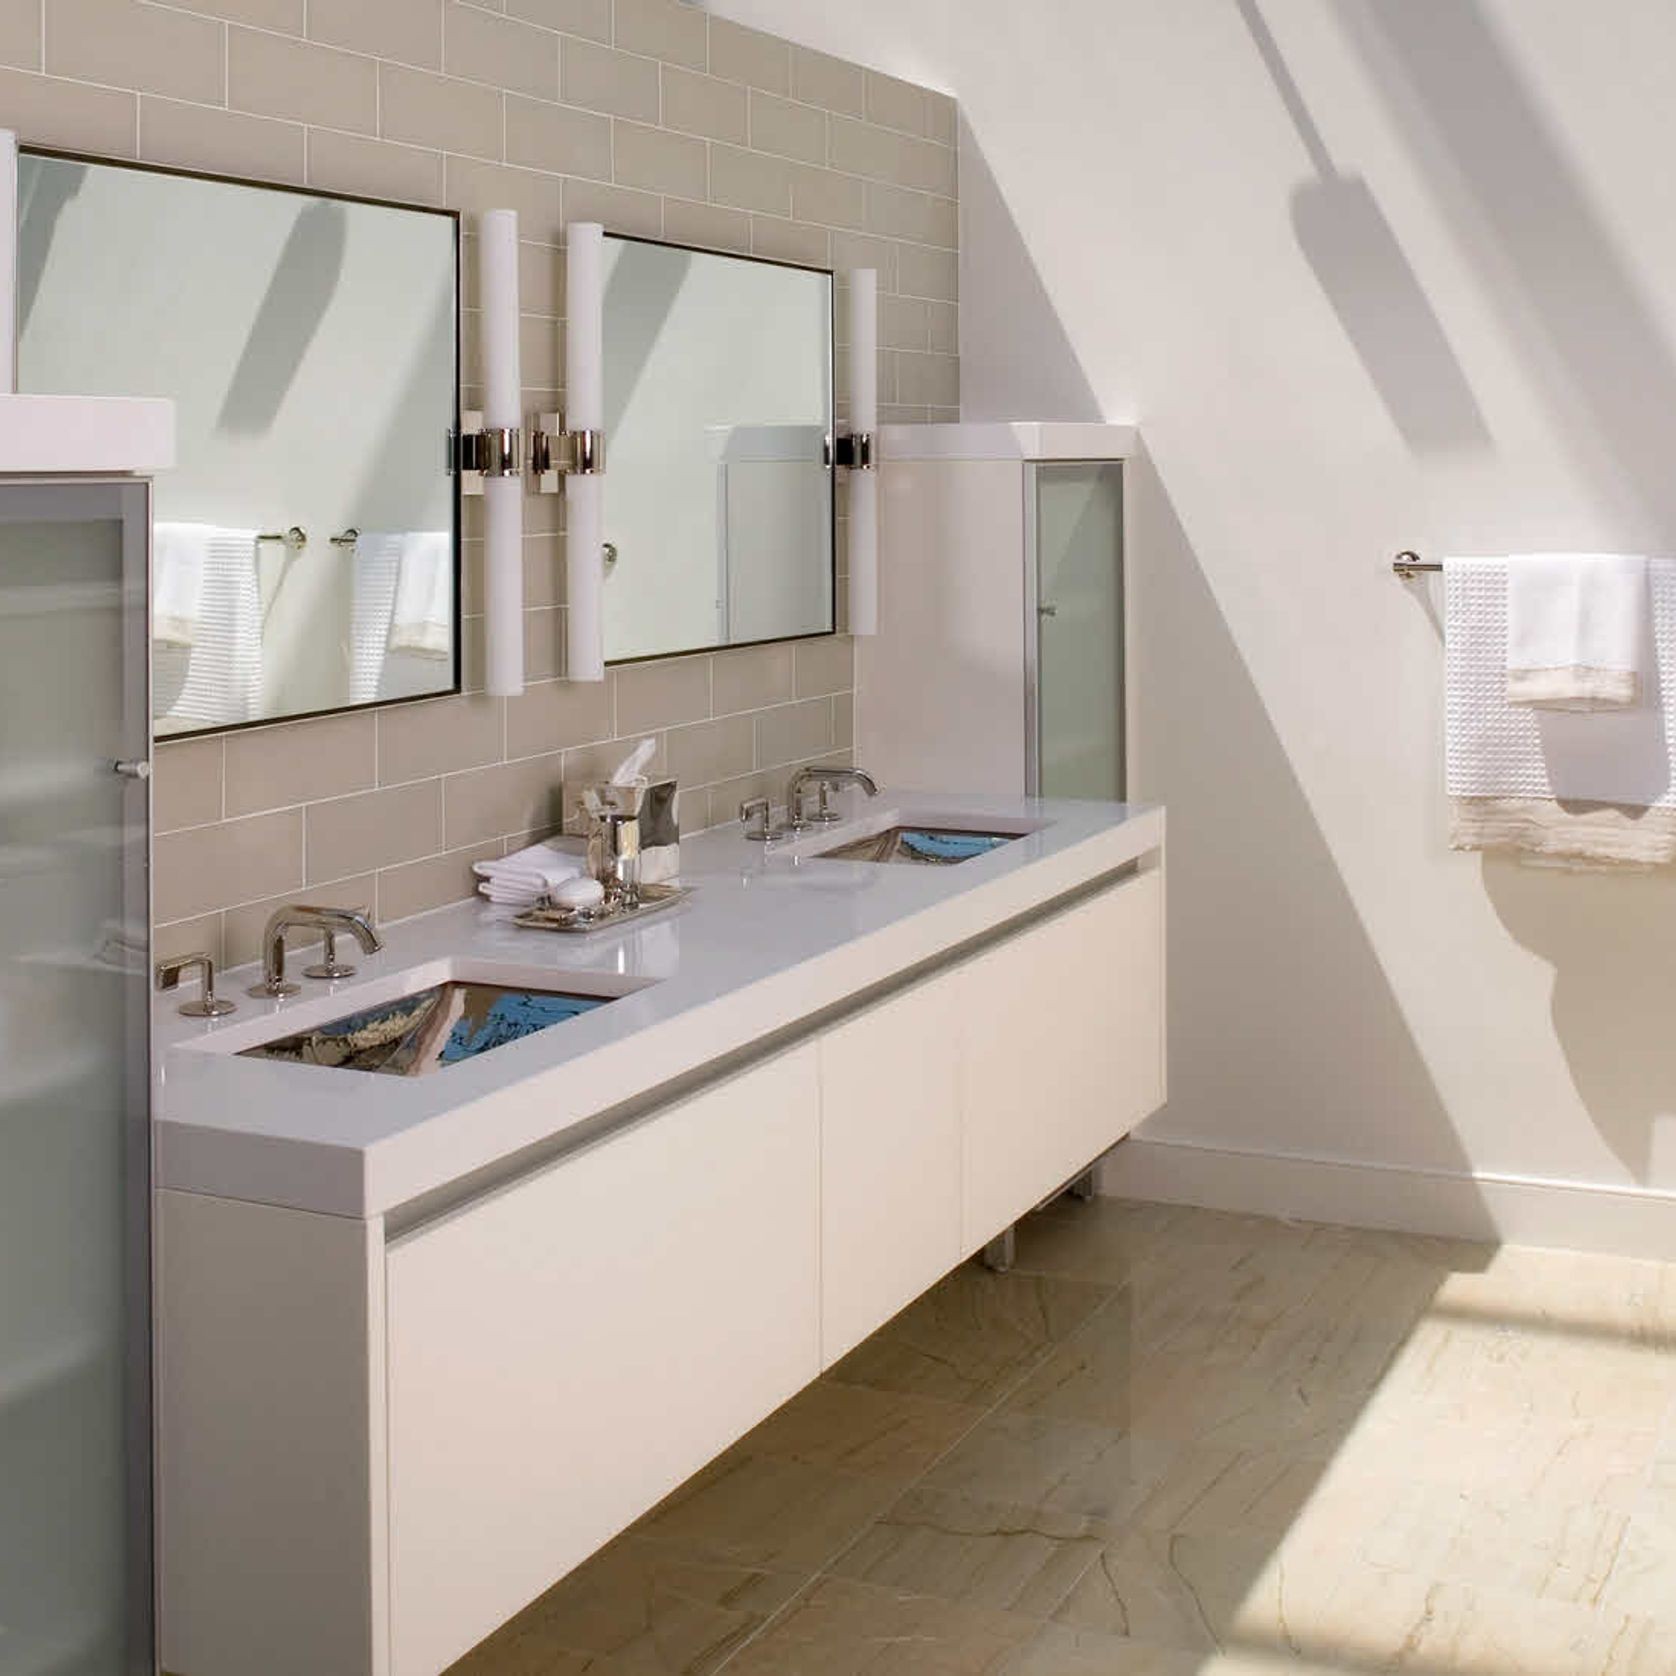 Bathroom Solutions gallery detail image